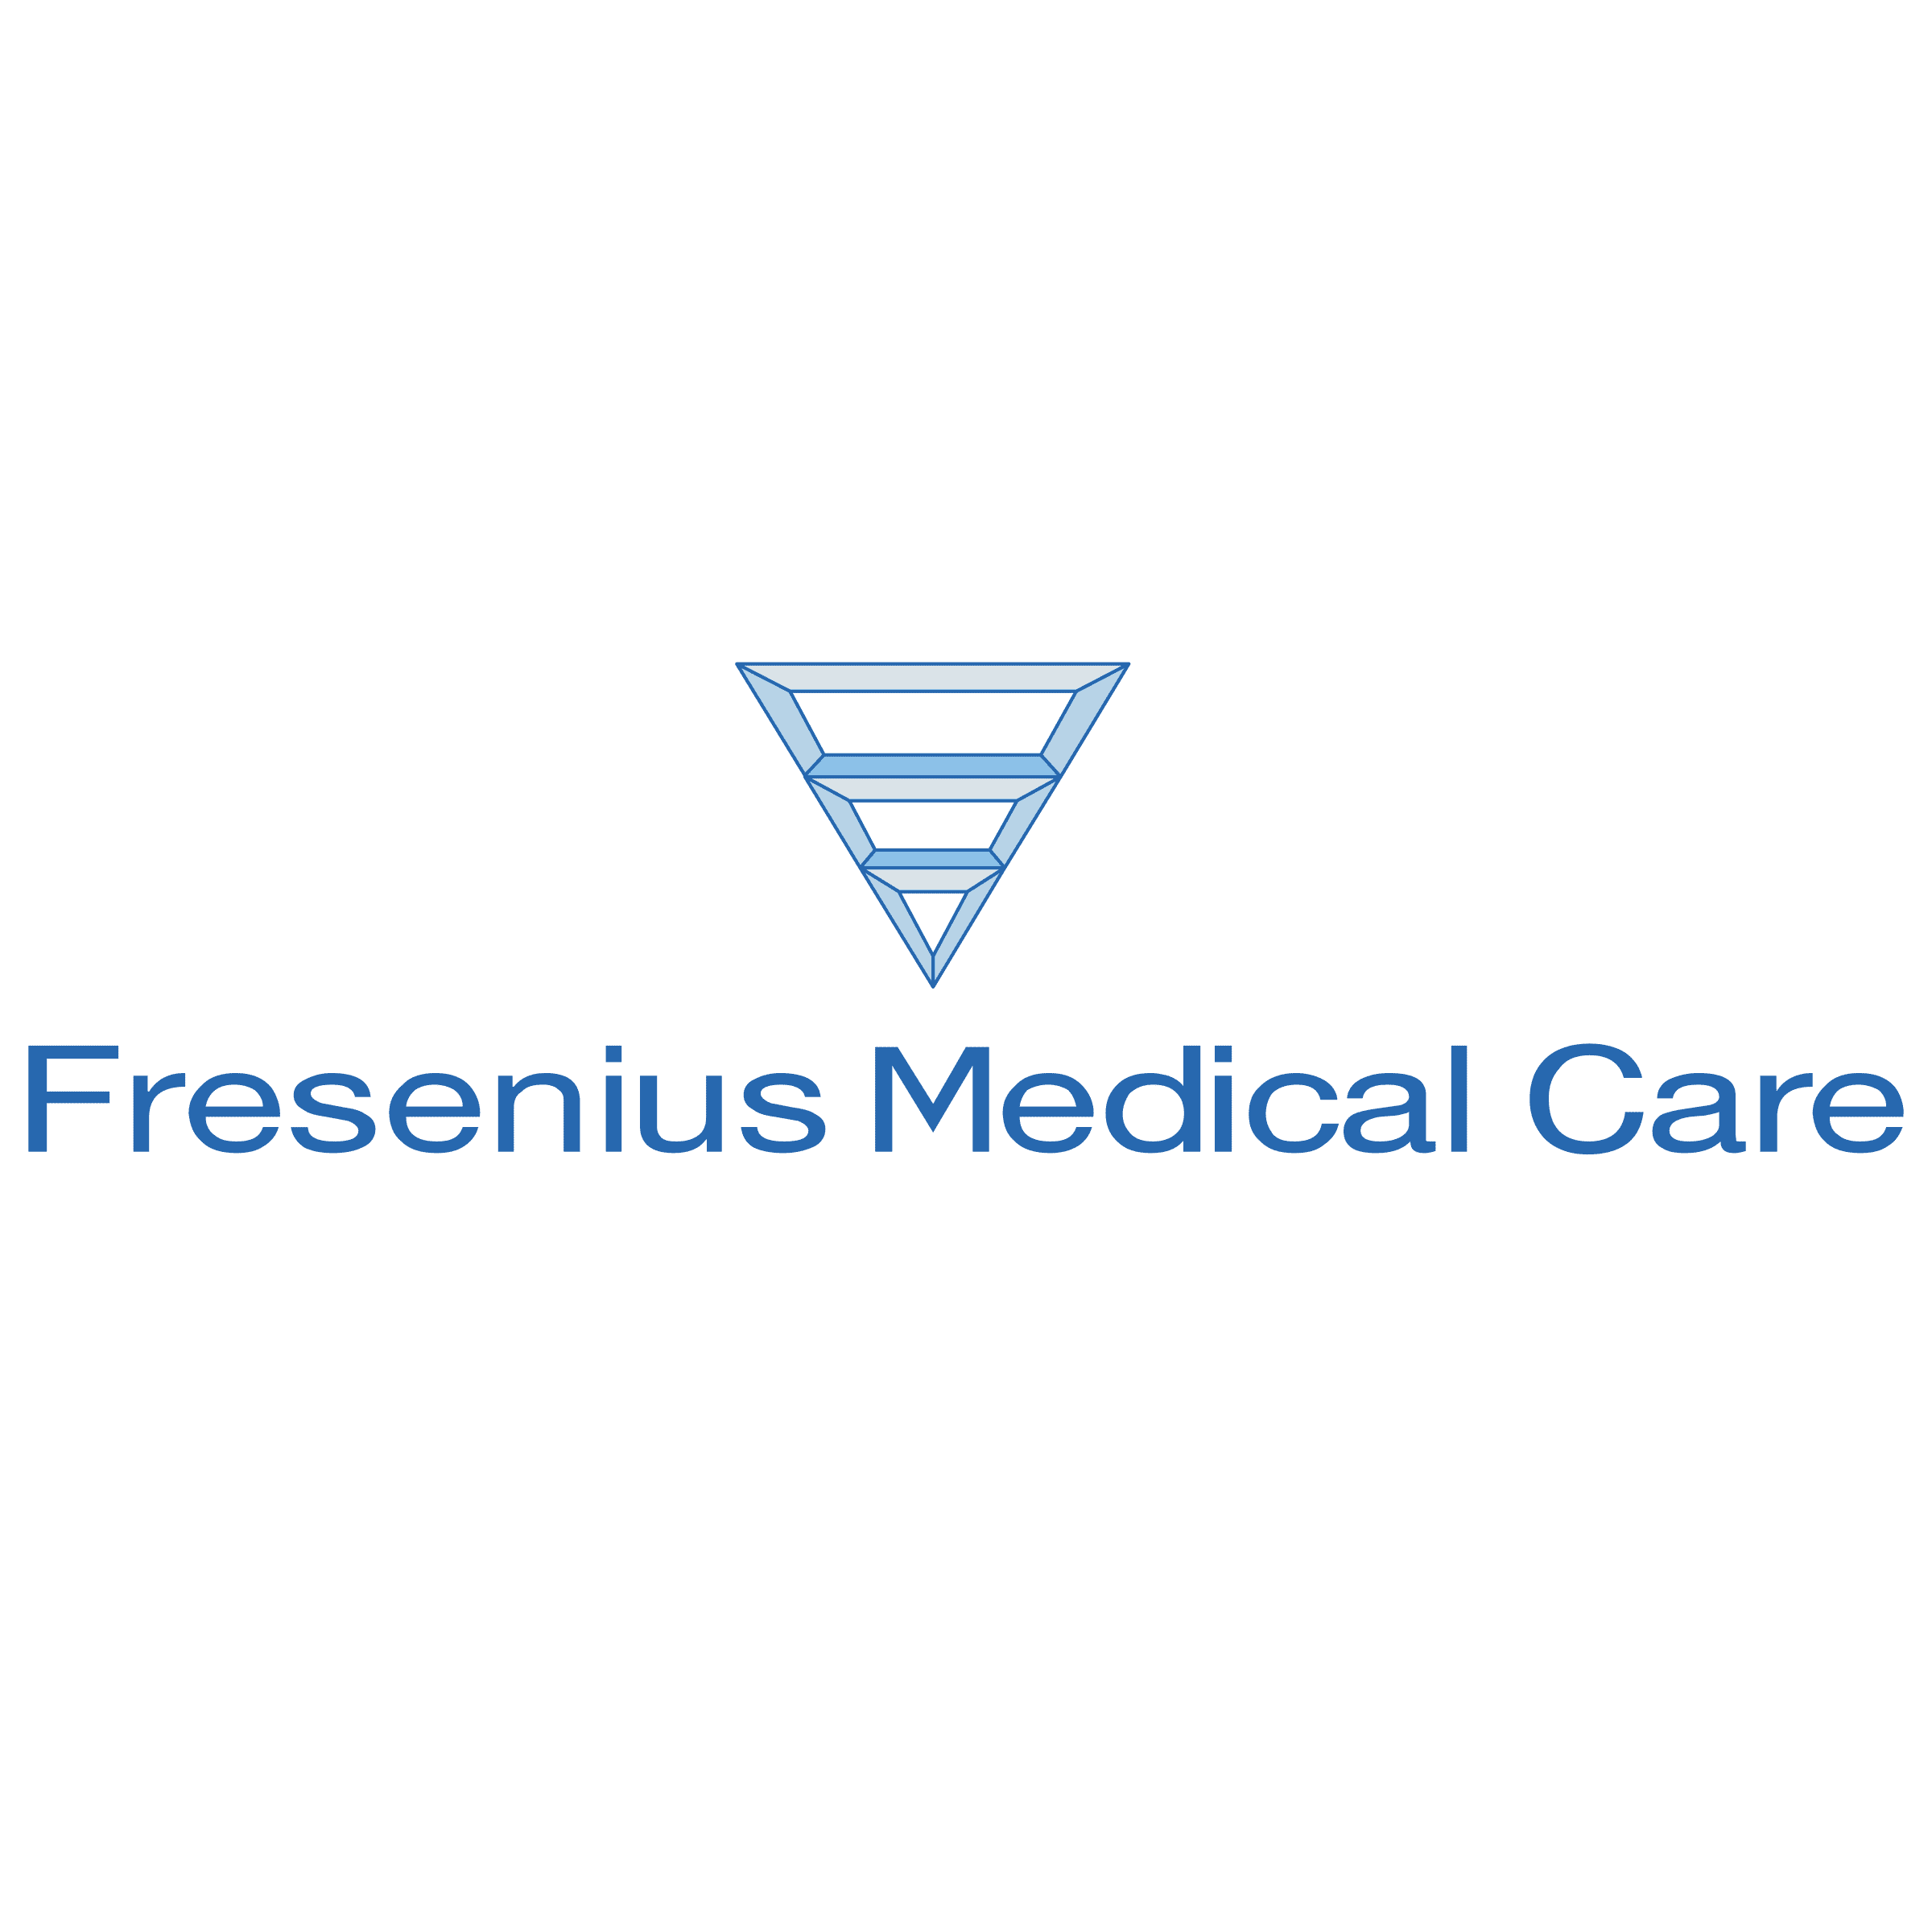 fresenius-medical-care-logo-png-transparent